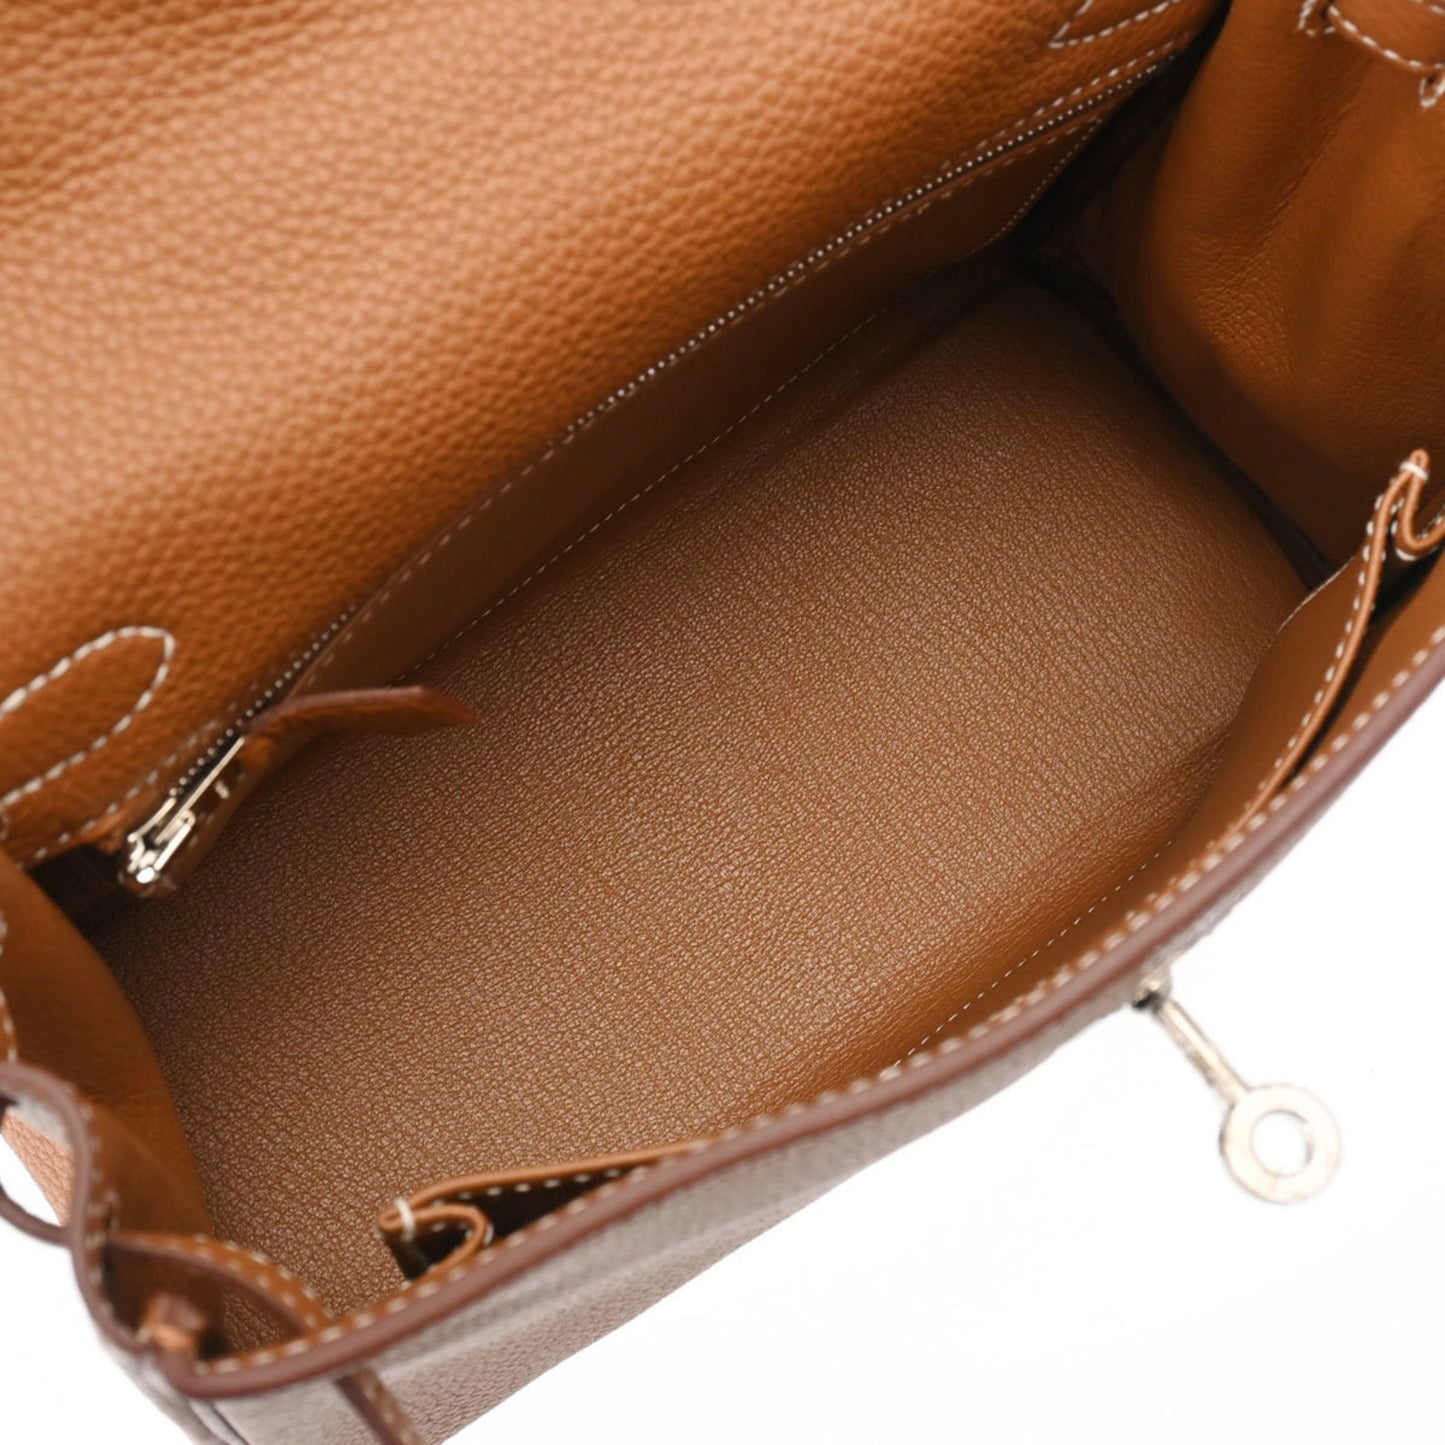 Hermes Women's Golden Leather Handbag with Clochette and Dust Bag in Gold